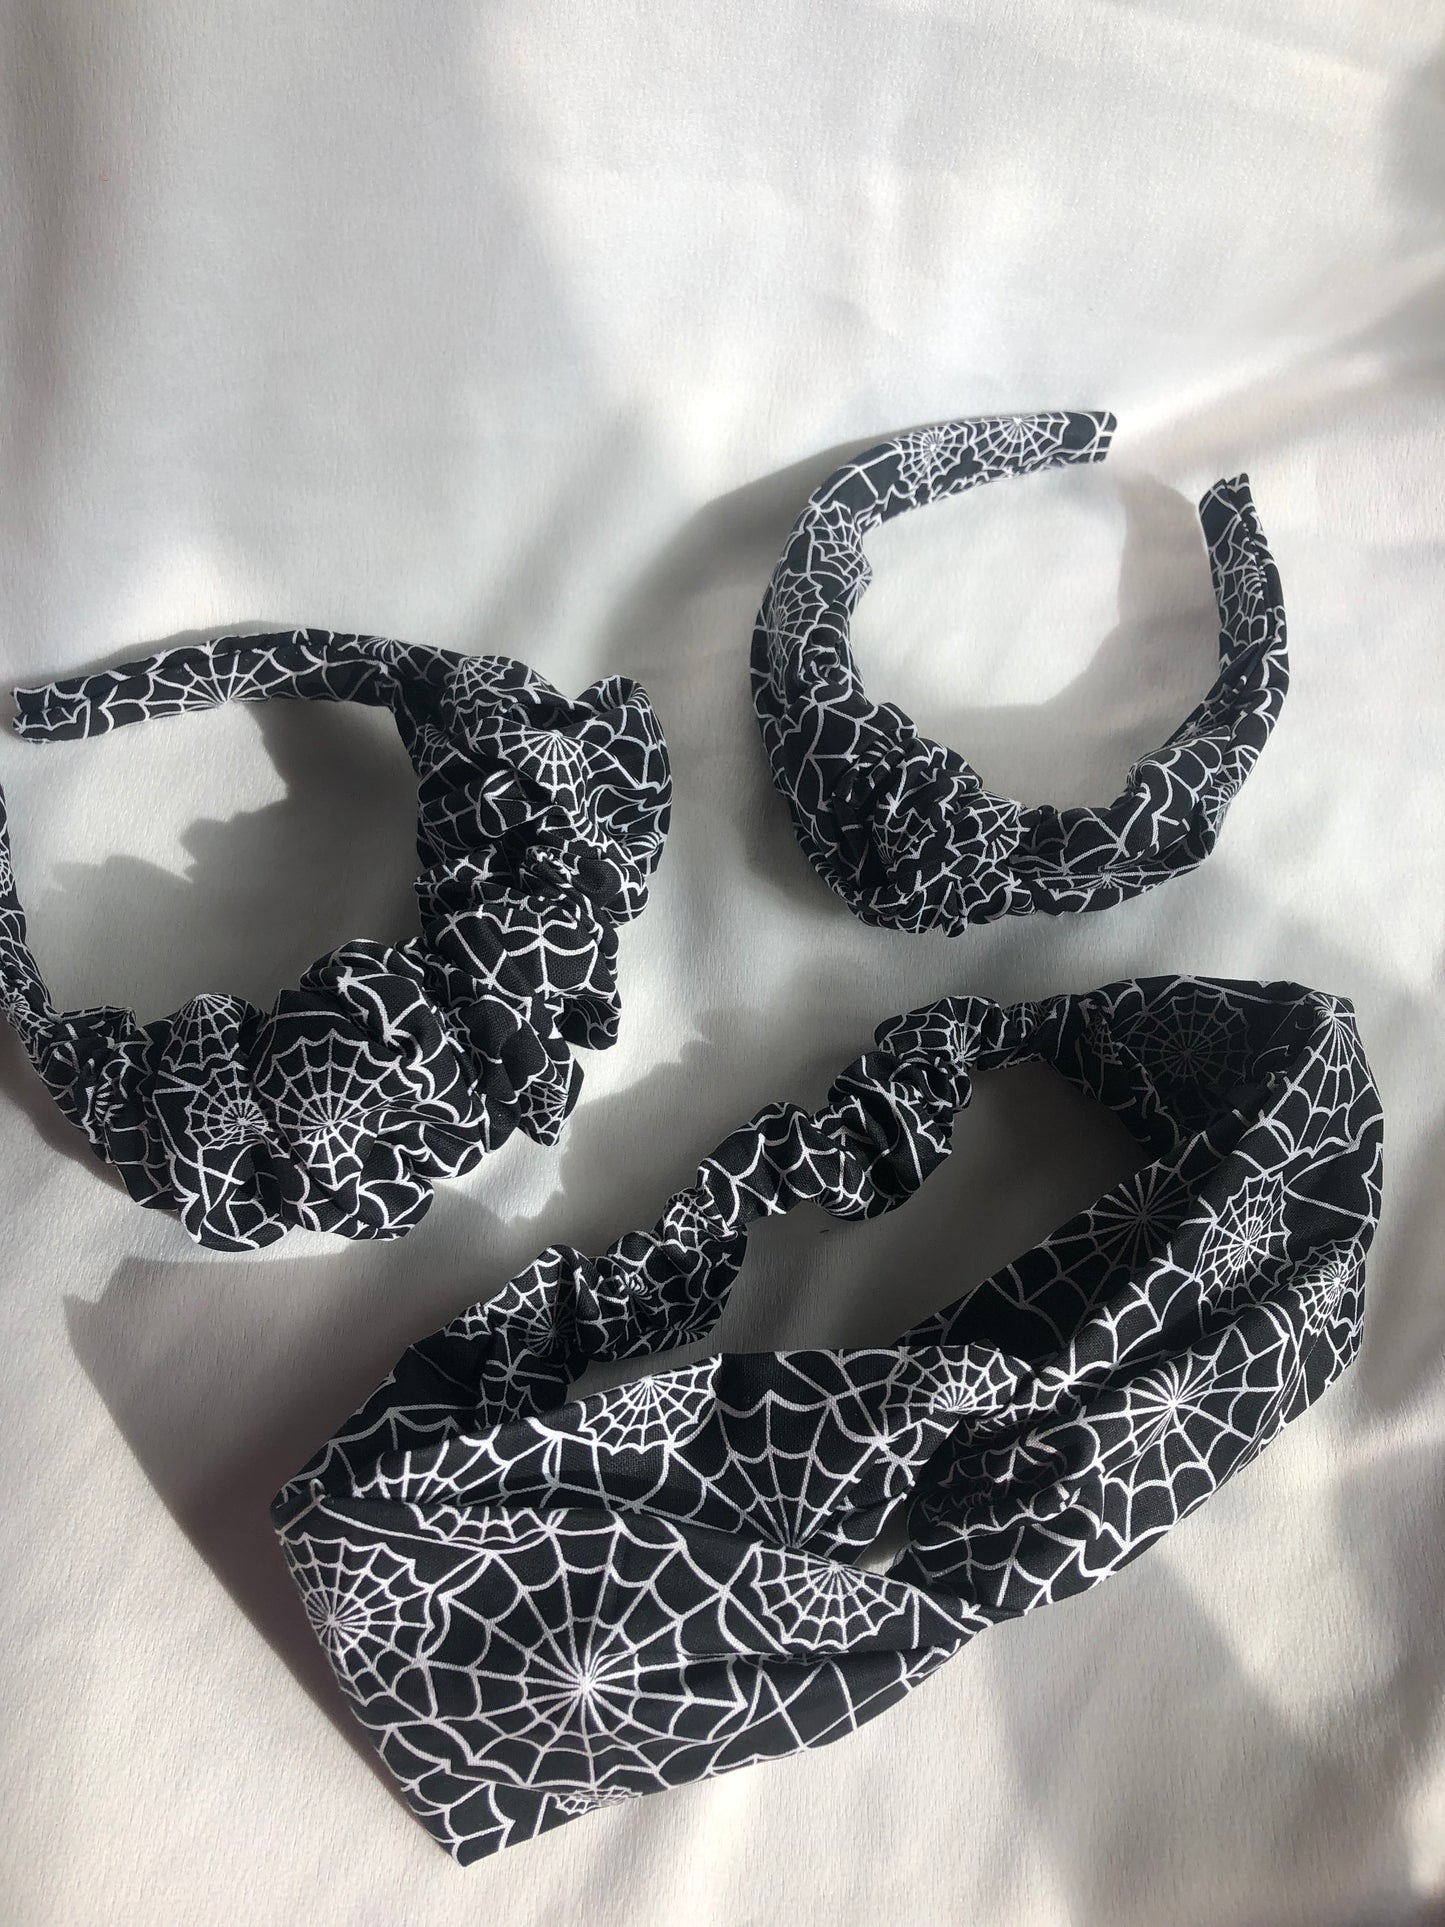 Black and White Spiderwebs Headband - choose style